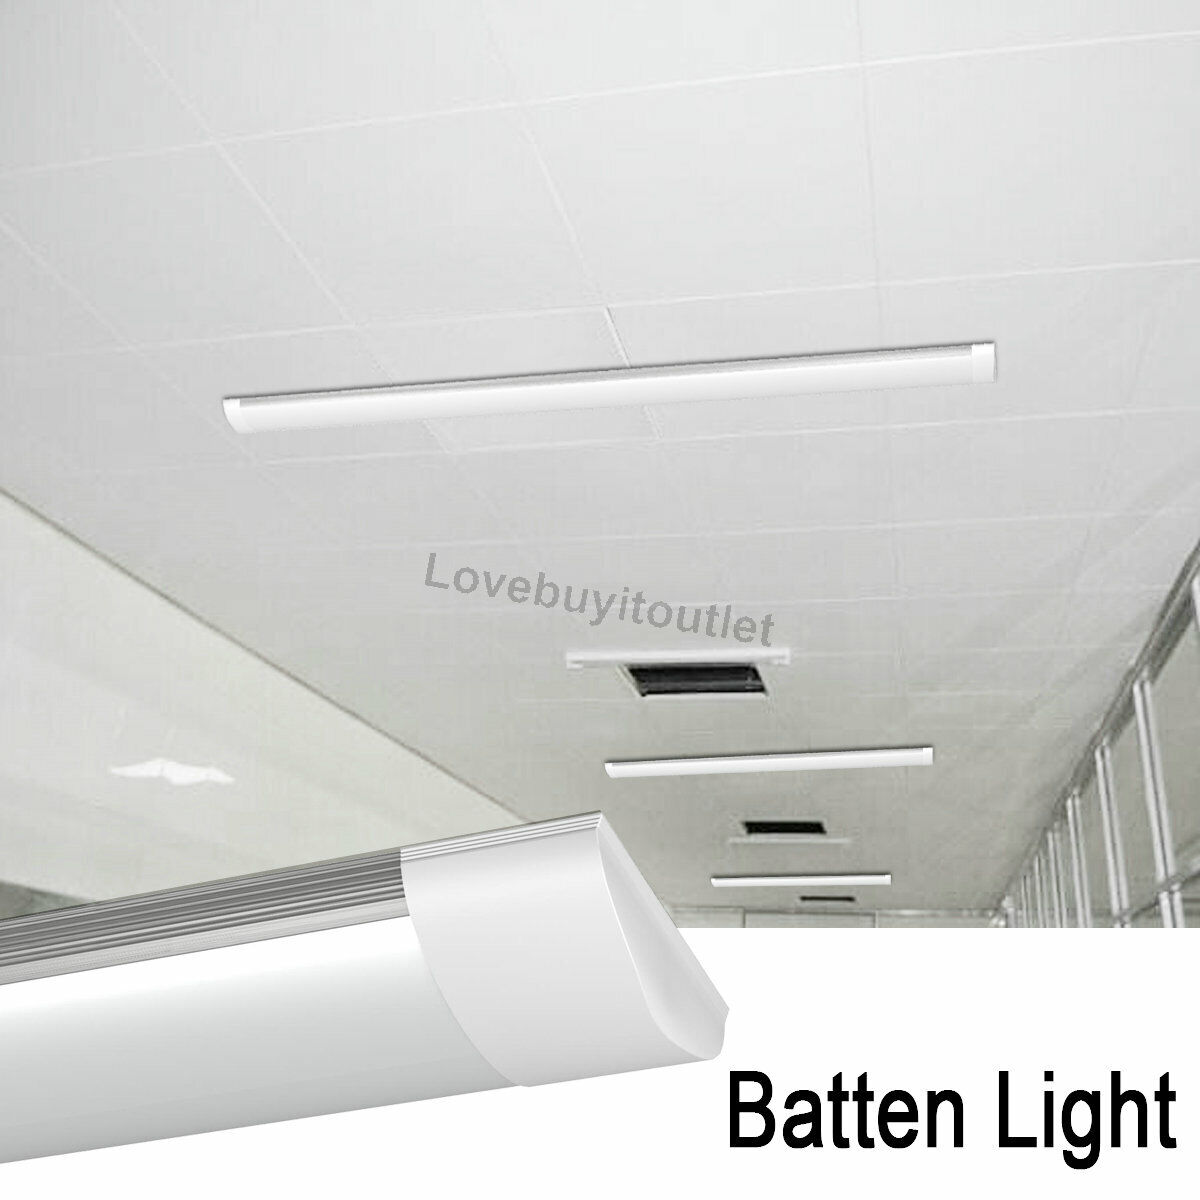 4x 4 Ft 36W Batten Light Shop Light Utility LED Cool White for Office Garage Lovebuyitoutlet Does Not Apply - фотография #6